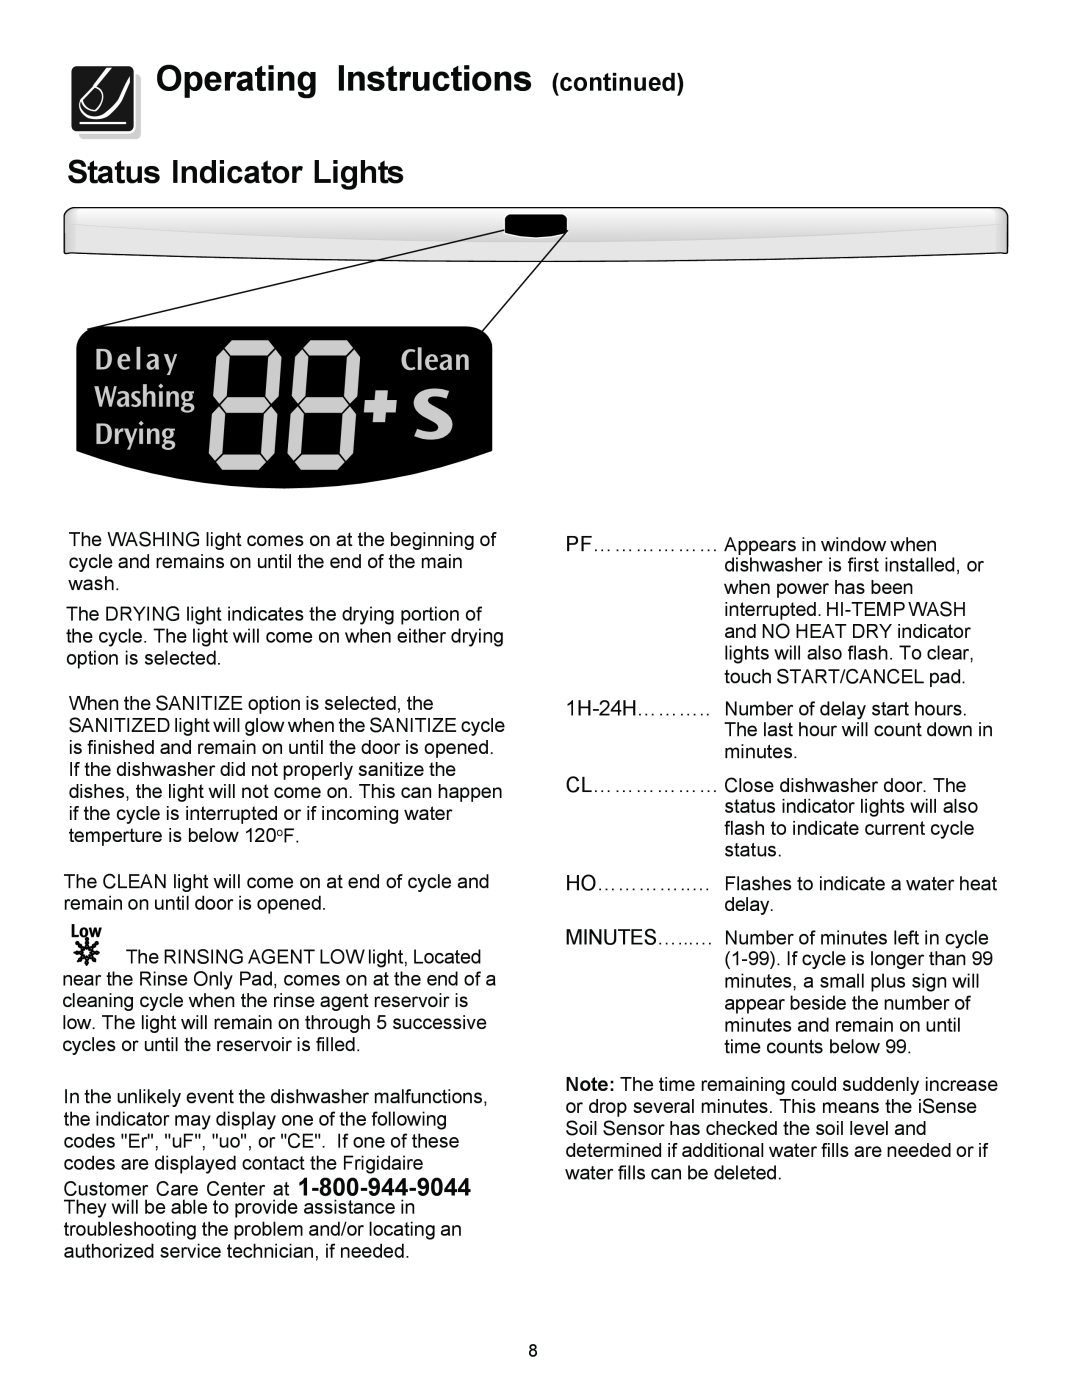 Frigidaire 4000 warranty Status Indicator Lights, Operating Instructions continued 